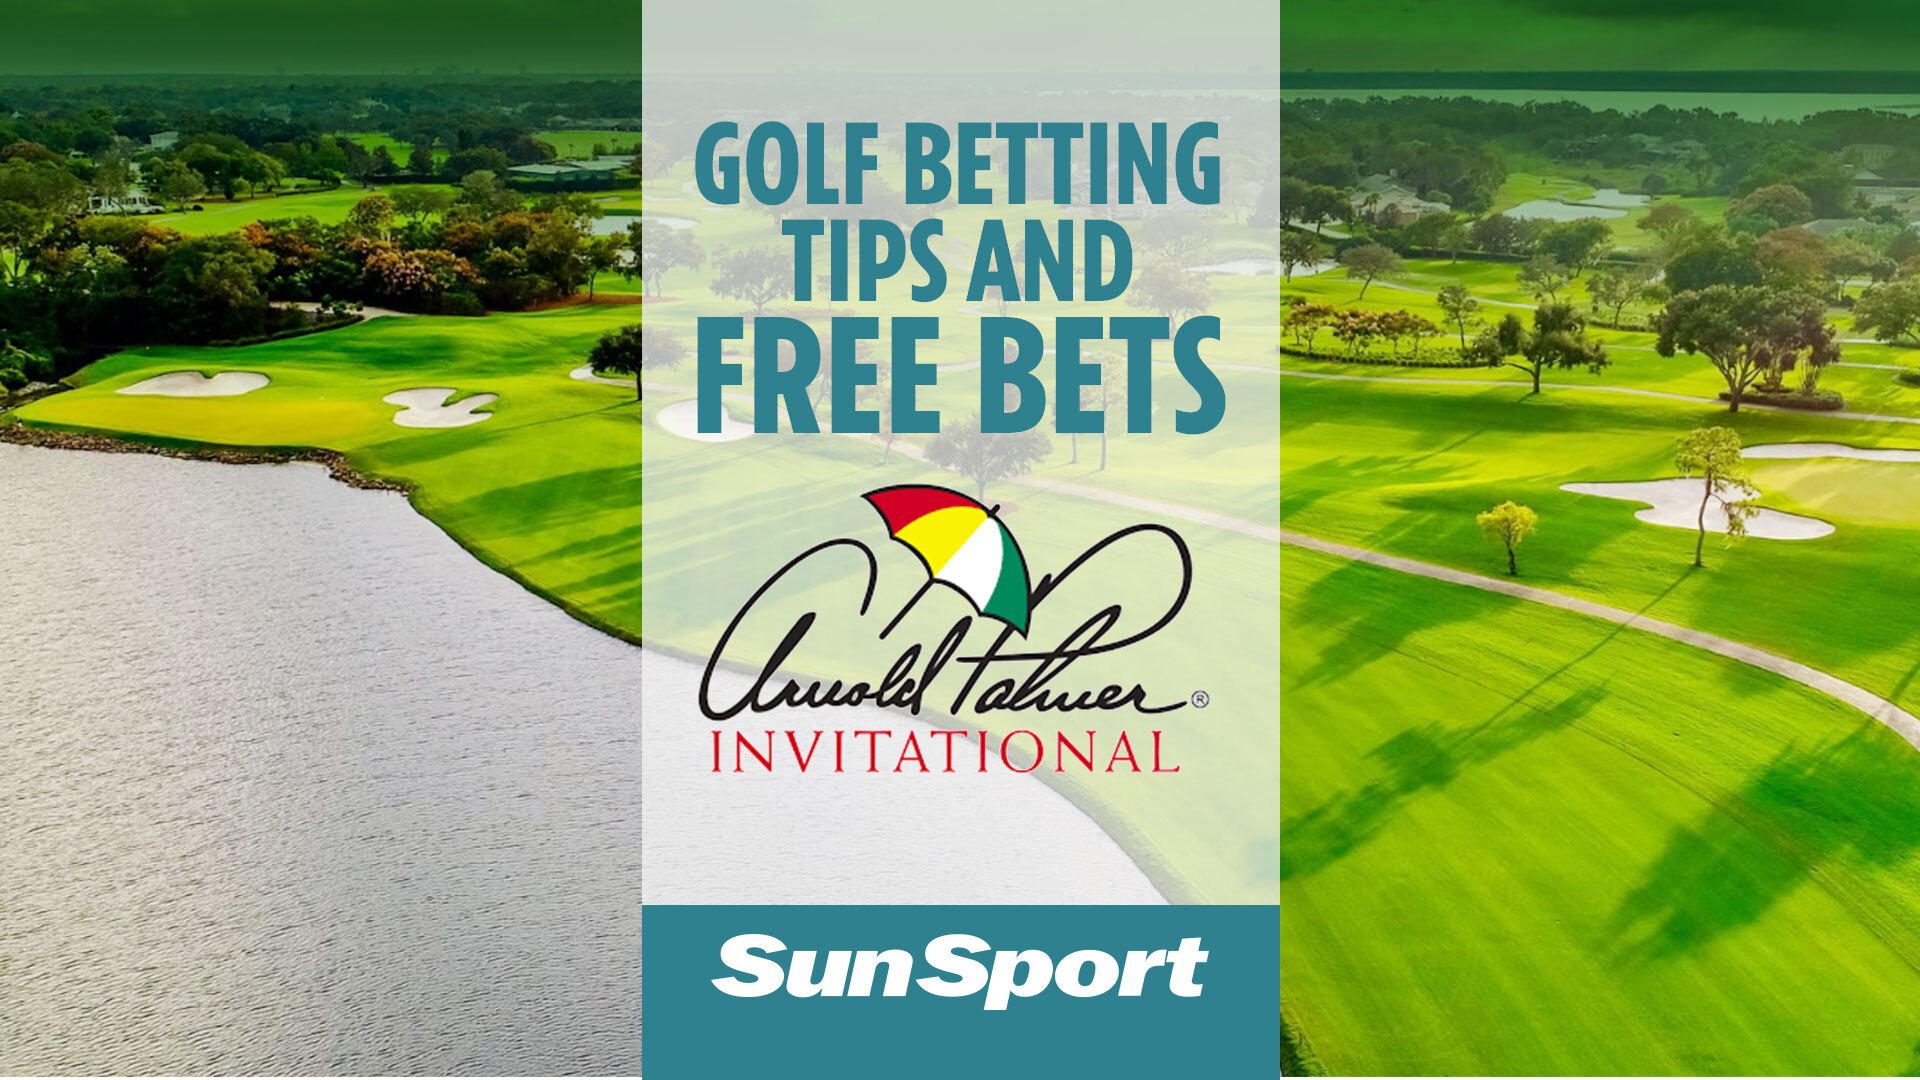 Photo: arnold palmer invitational golf betting tips